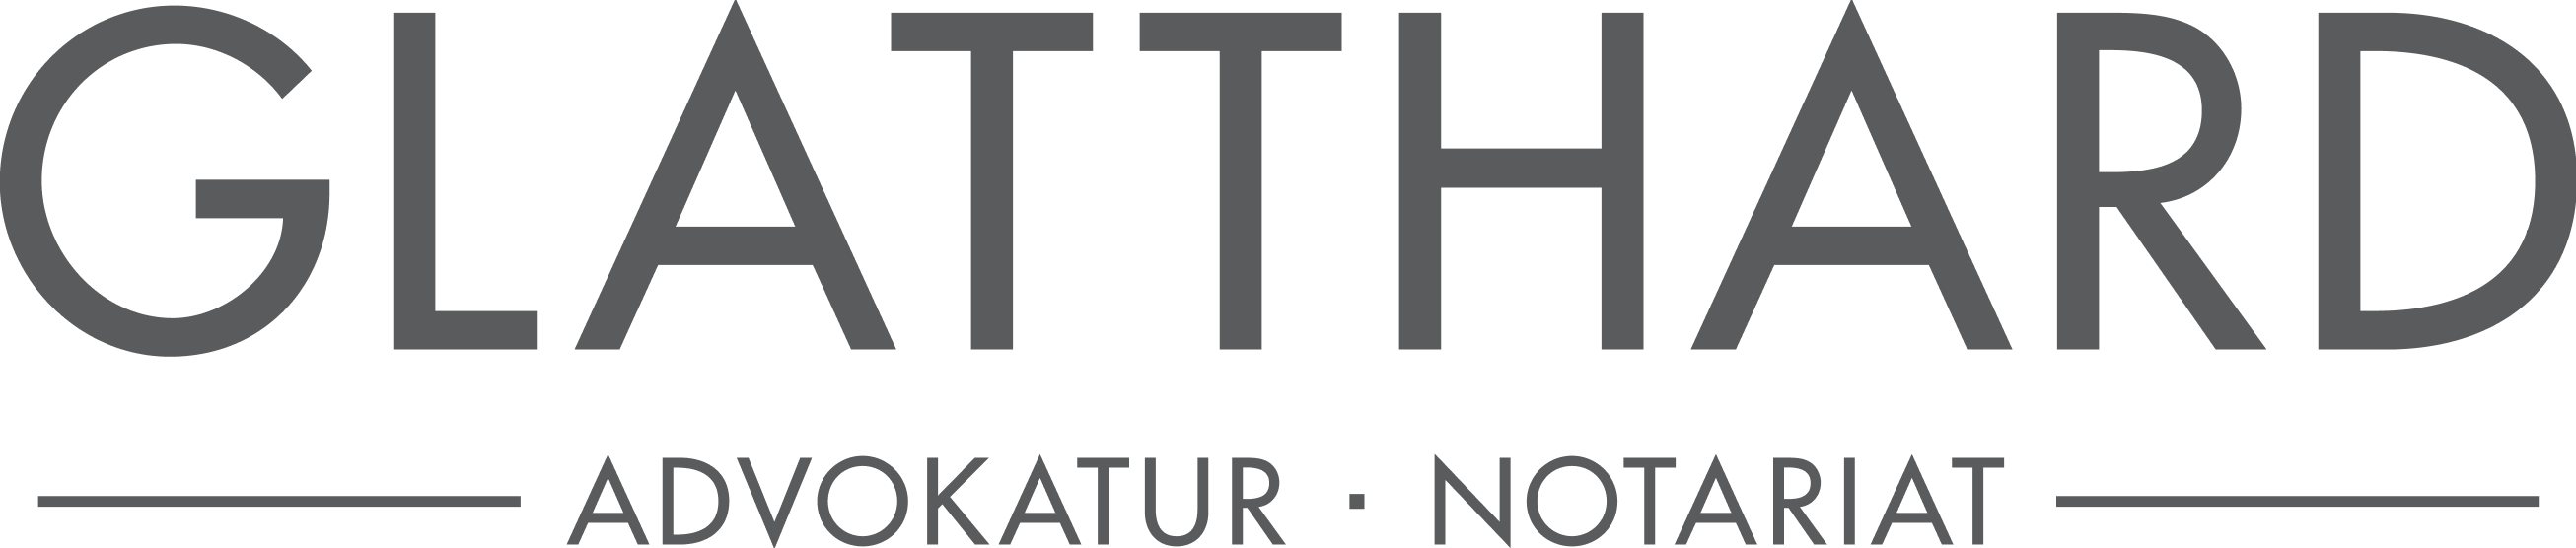 Glatthard law logo